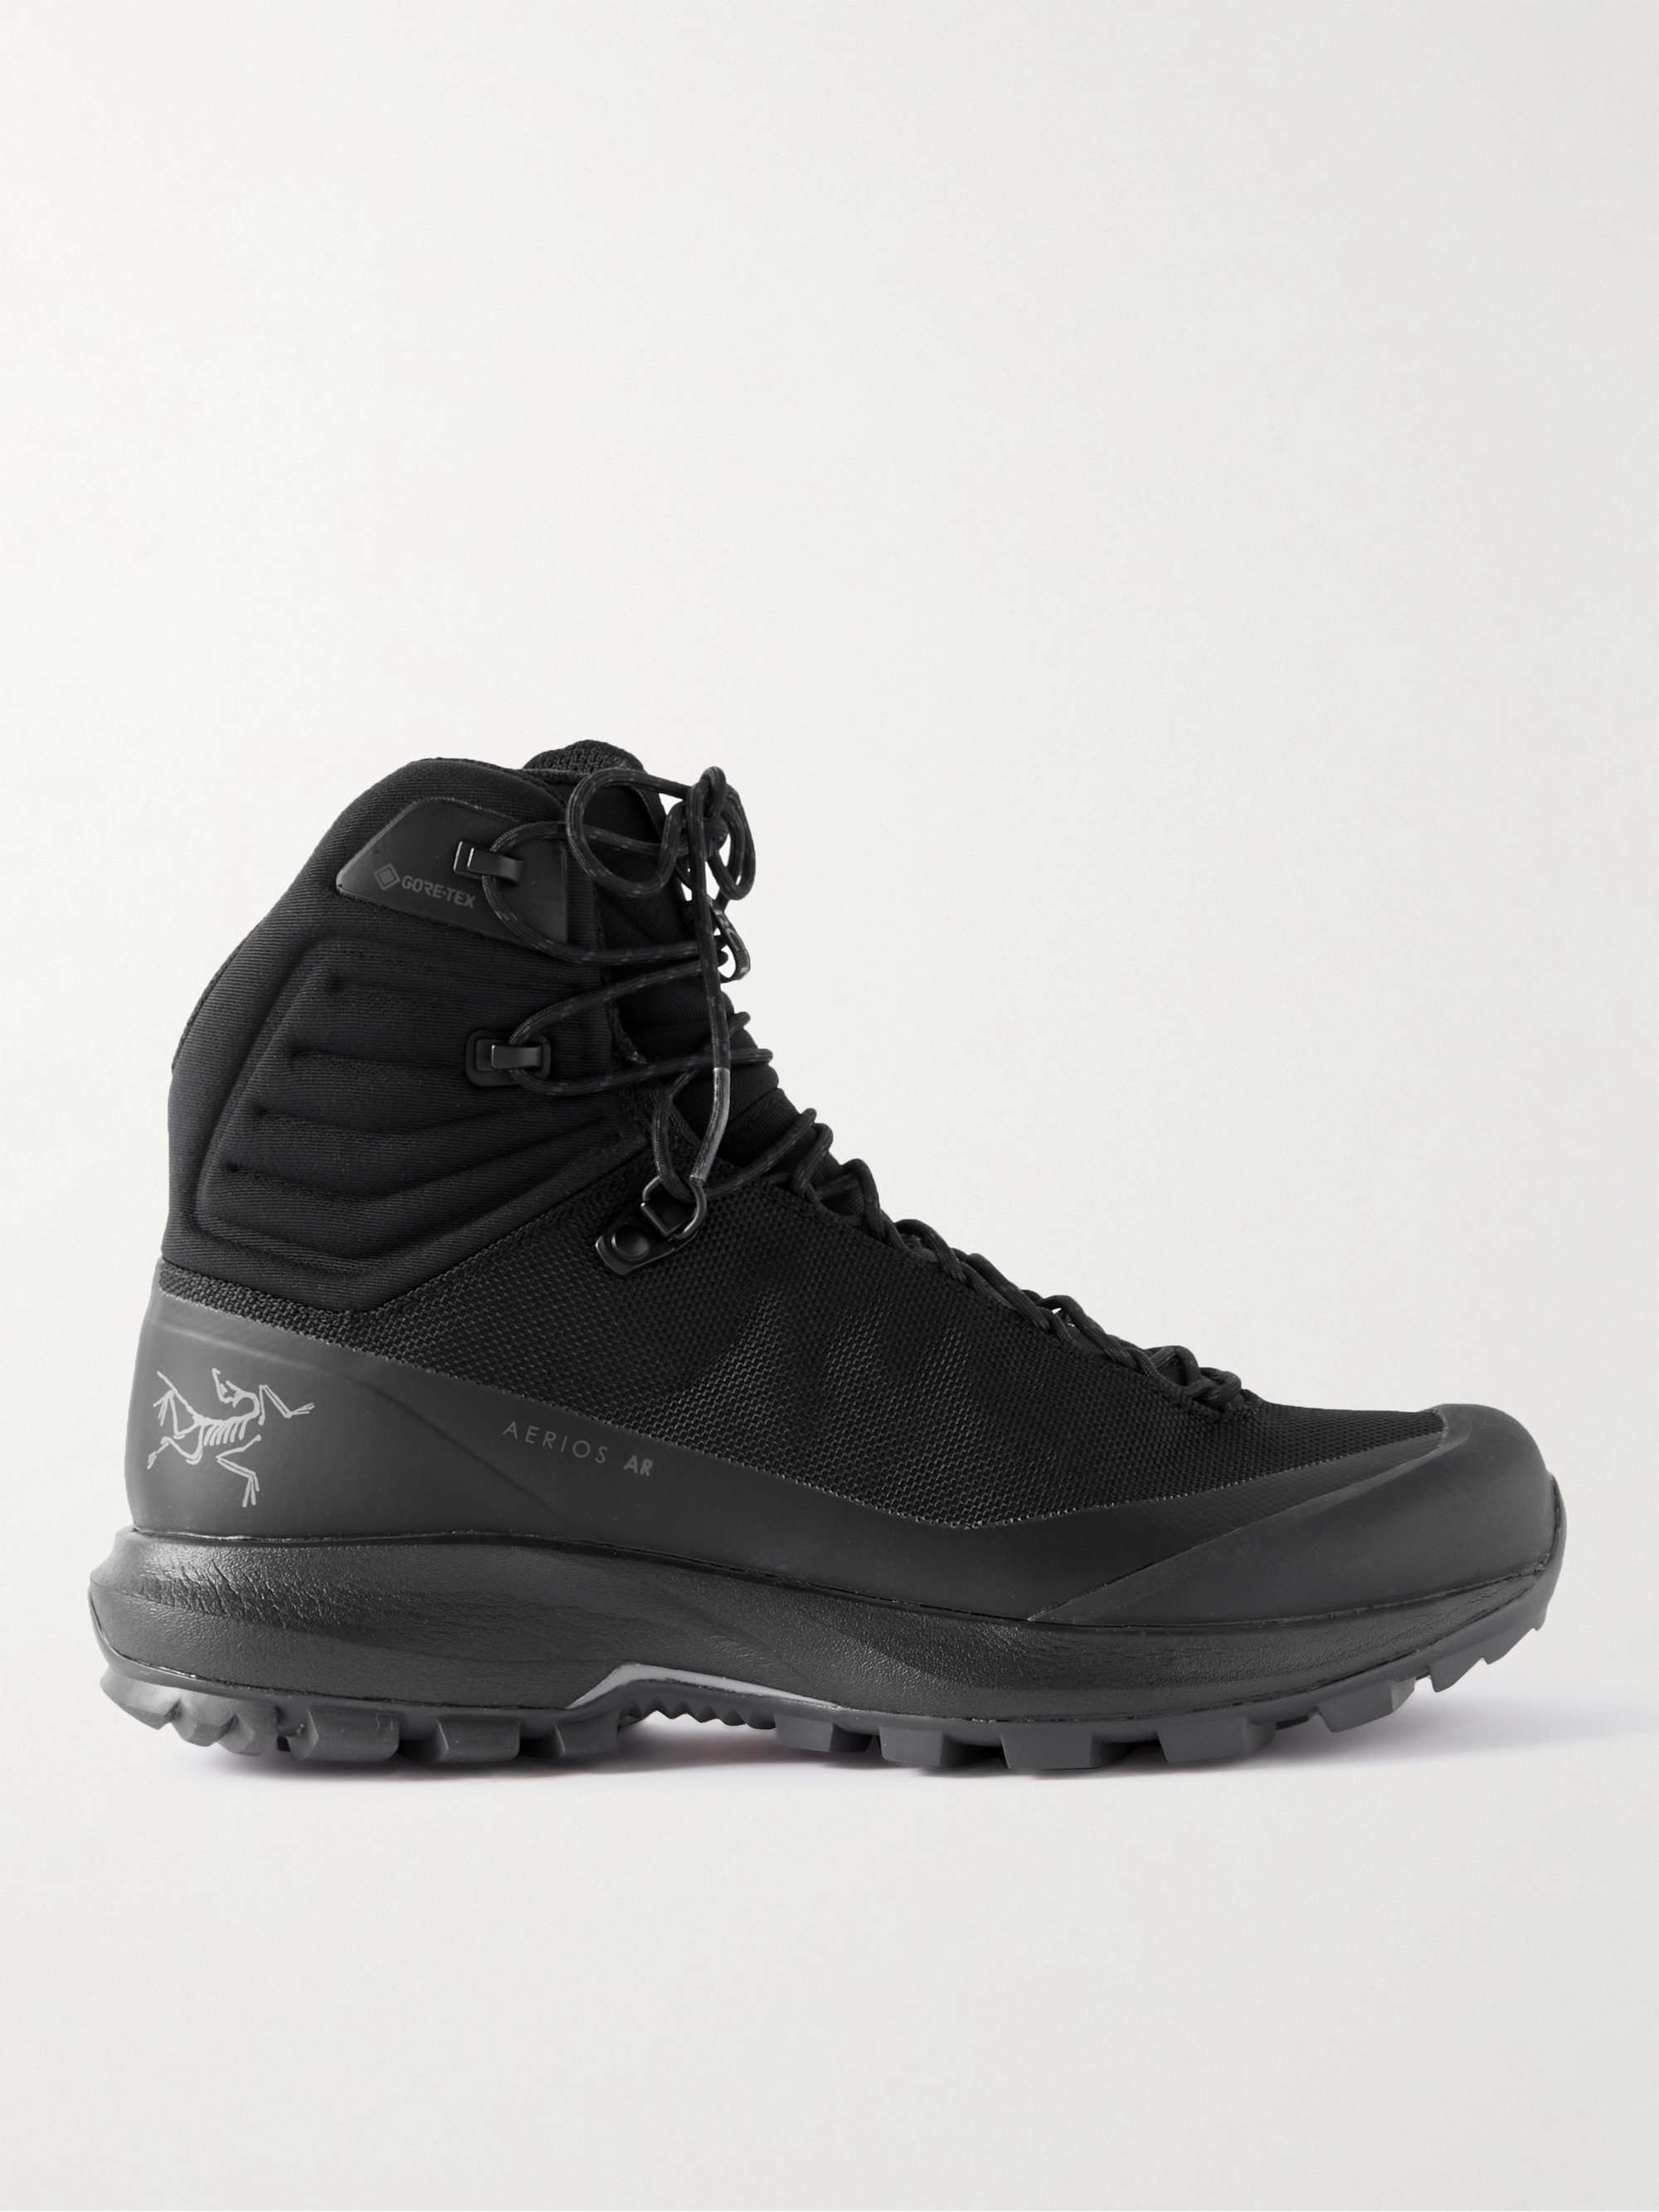 Black Aerios AR Mid GTX Rubber-Trimmed GORE-TEX Hiking Boots | ARC'TERYX |  MR PORTER